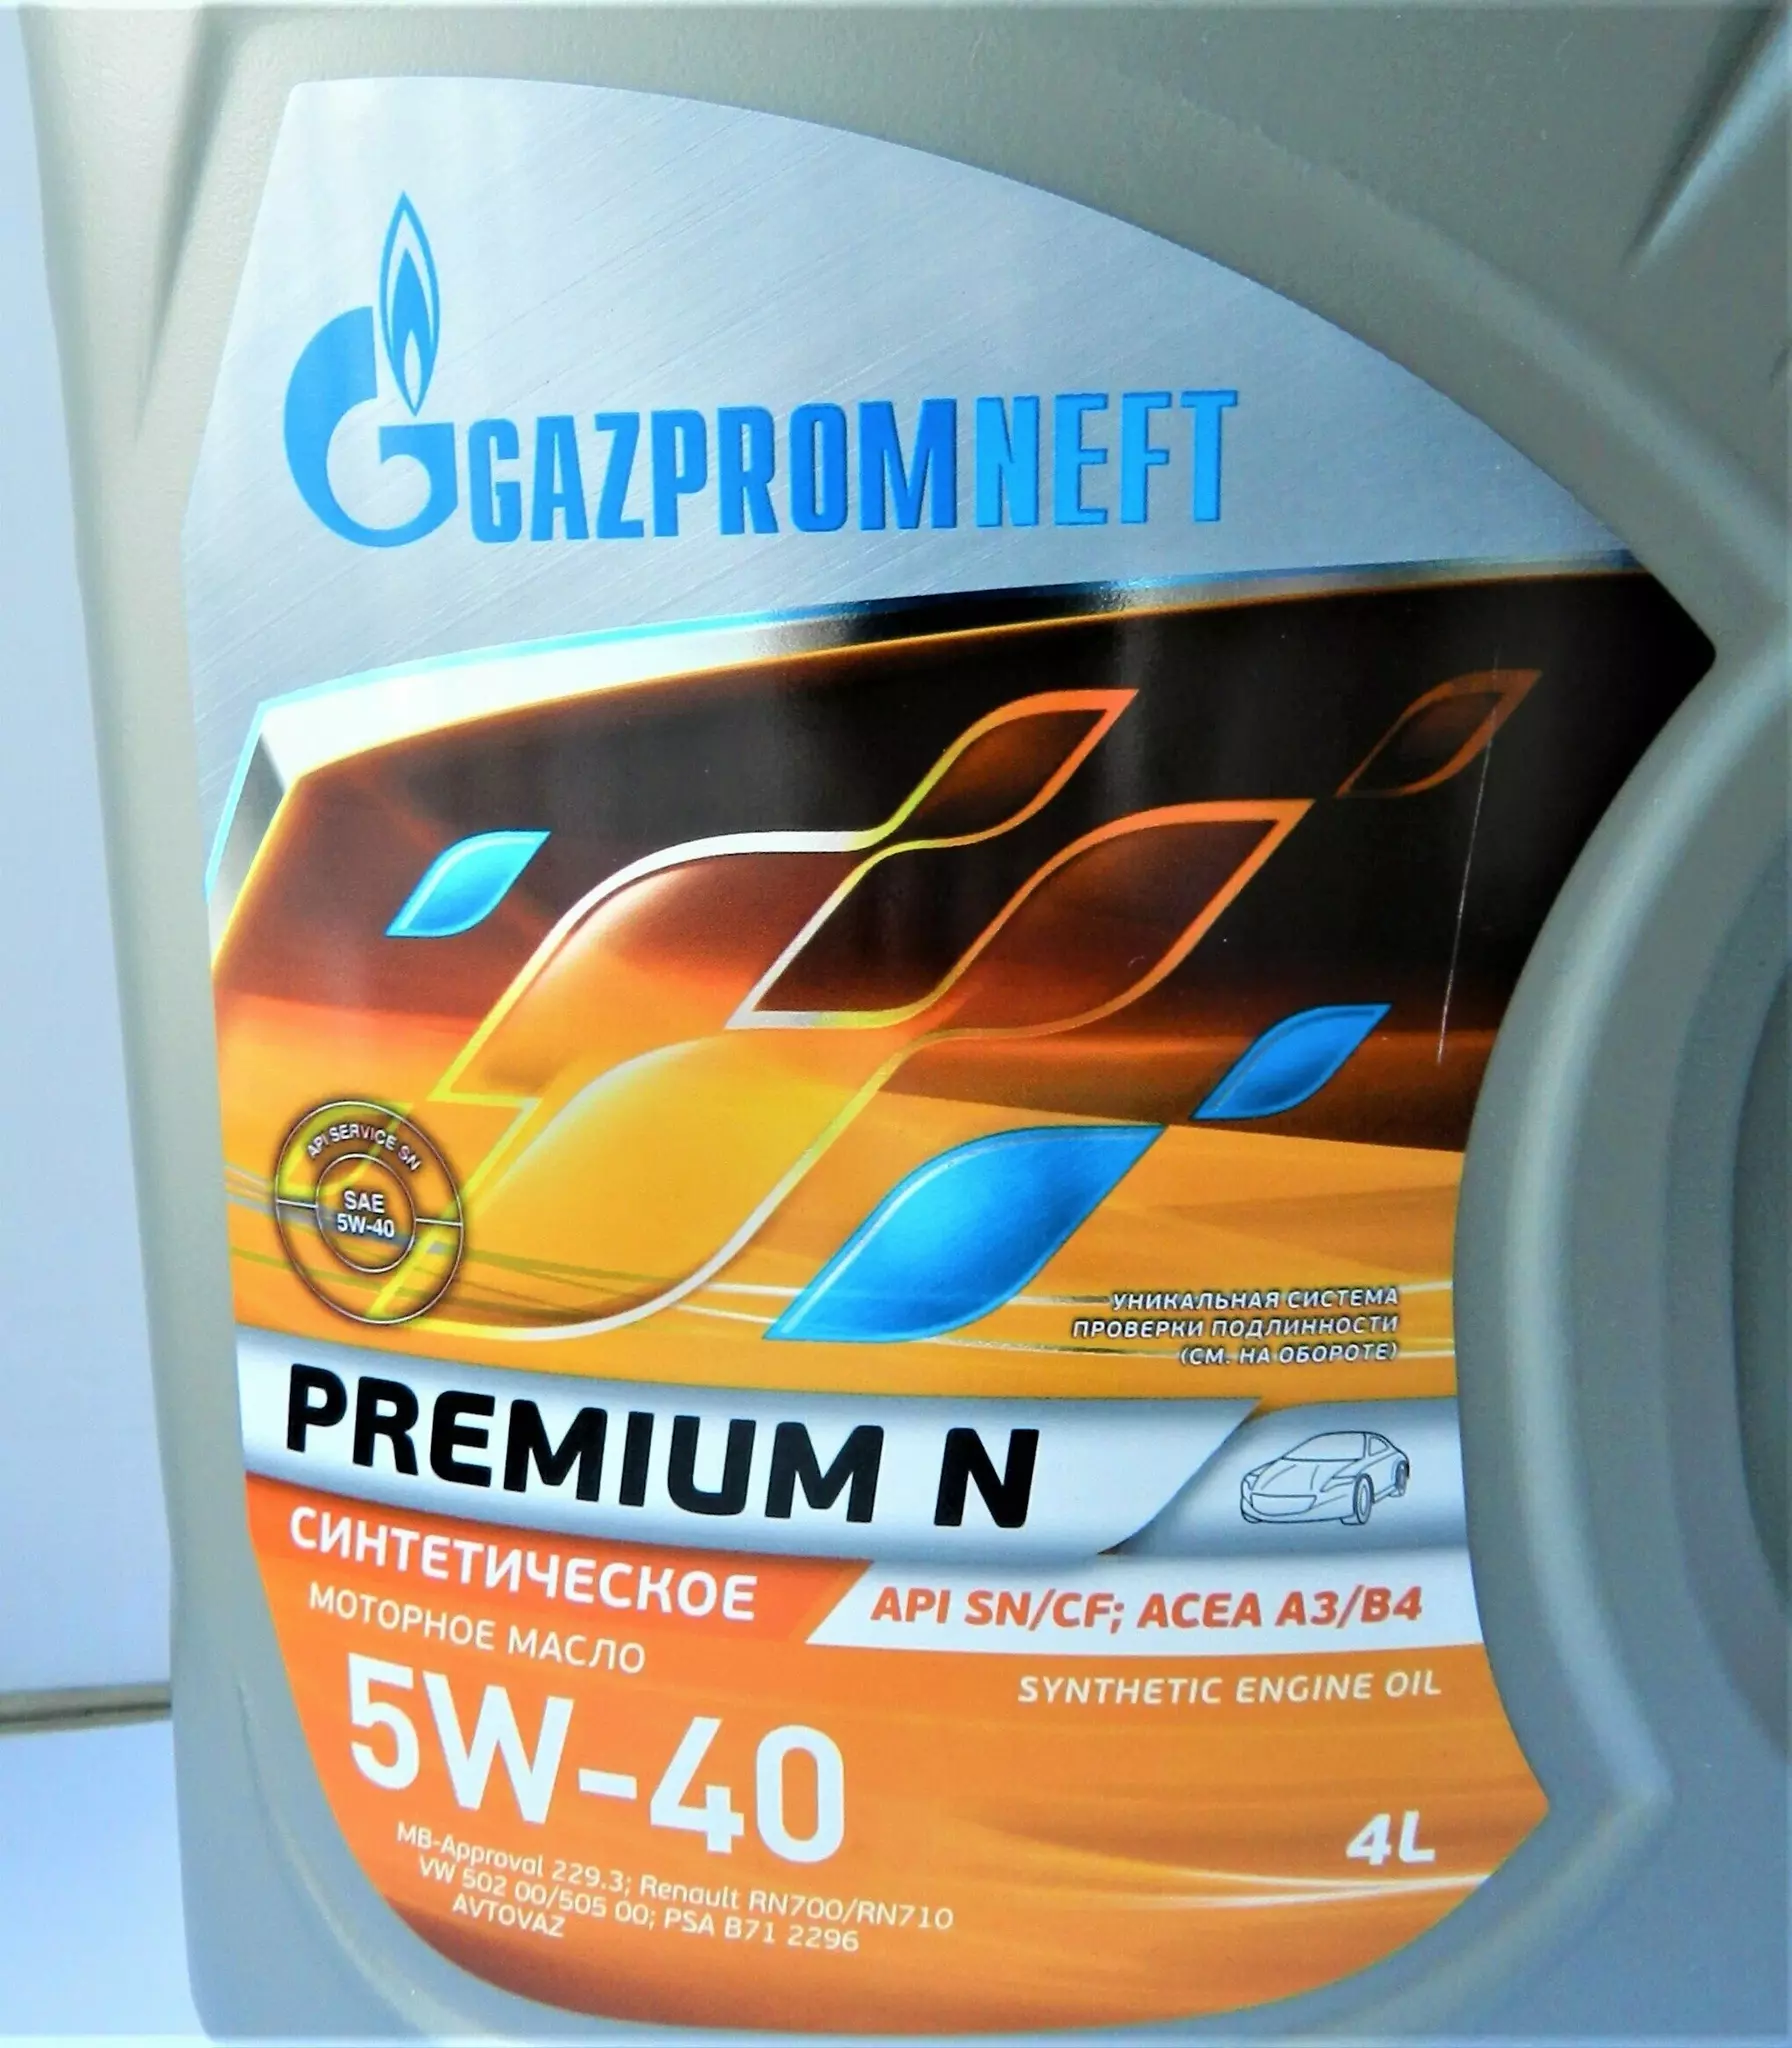 Gazpromneft Premium n 5w-40. Premium n5w40 4л. Масло Premium n 5w-40 4л Gazpromneft. Gazpromneft масло Premium n 5w-40 4л ЕОМ номер. Газпромнефть премиум 5w40 отзывы